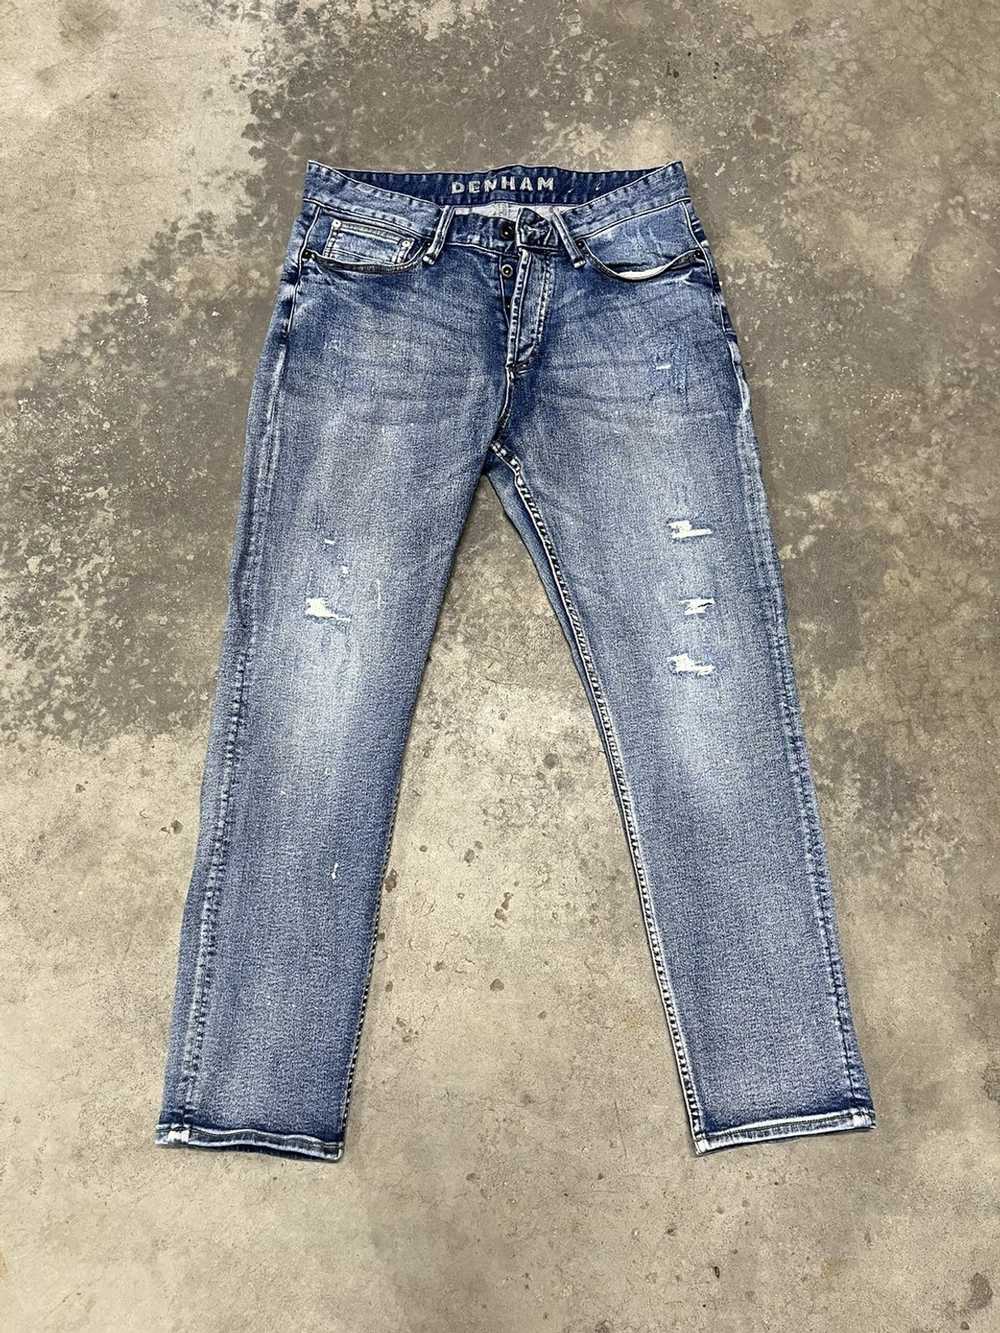 Denham boyfriend jeans - Gem